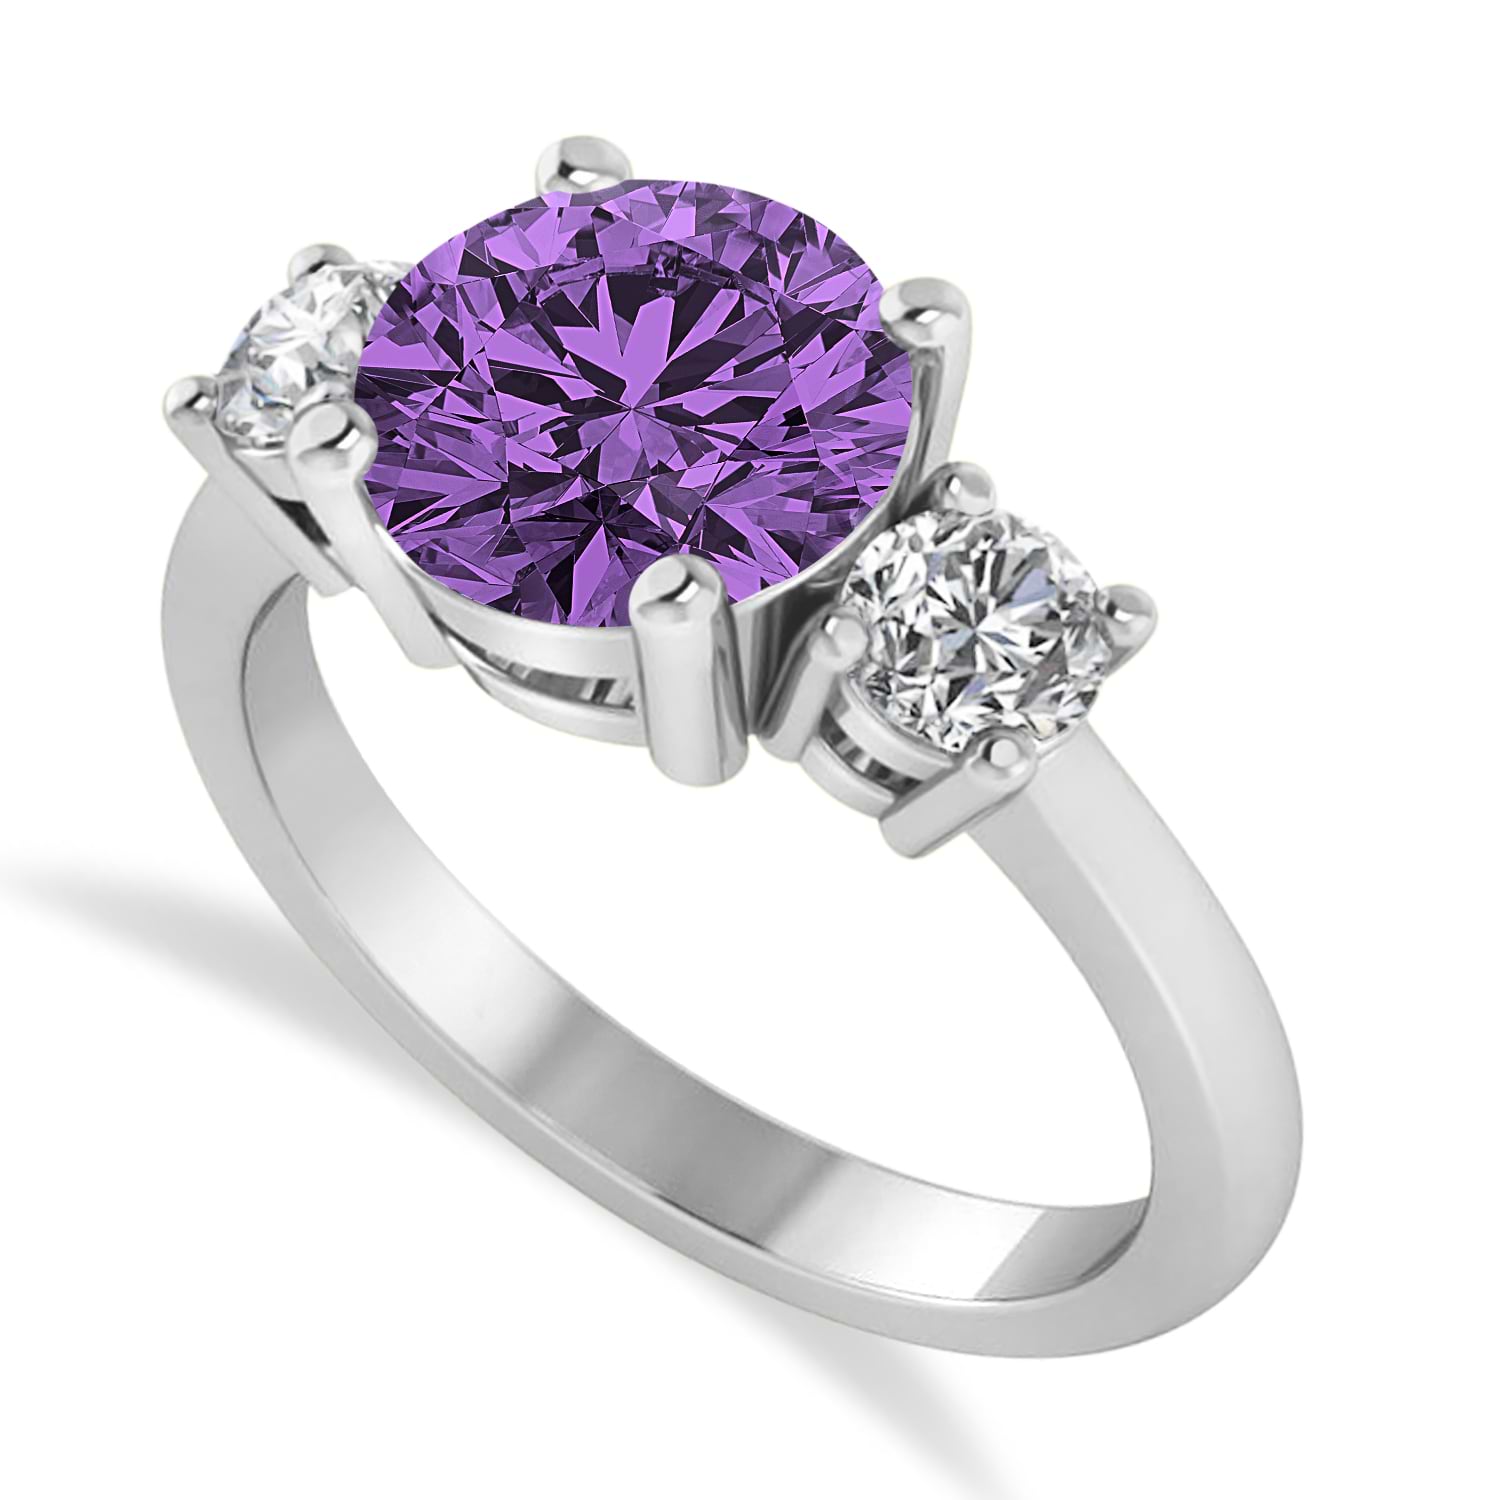 Amethyst Engagement Rings | CustomMade.com